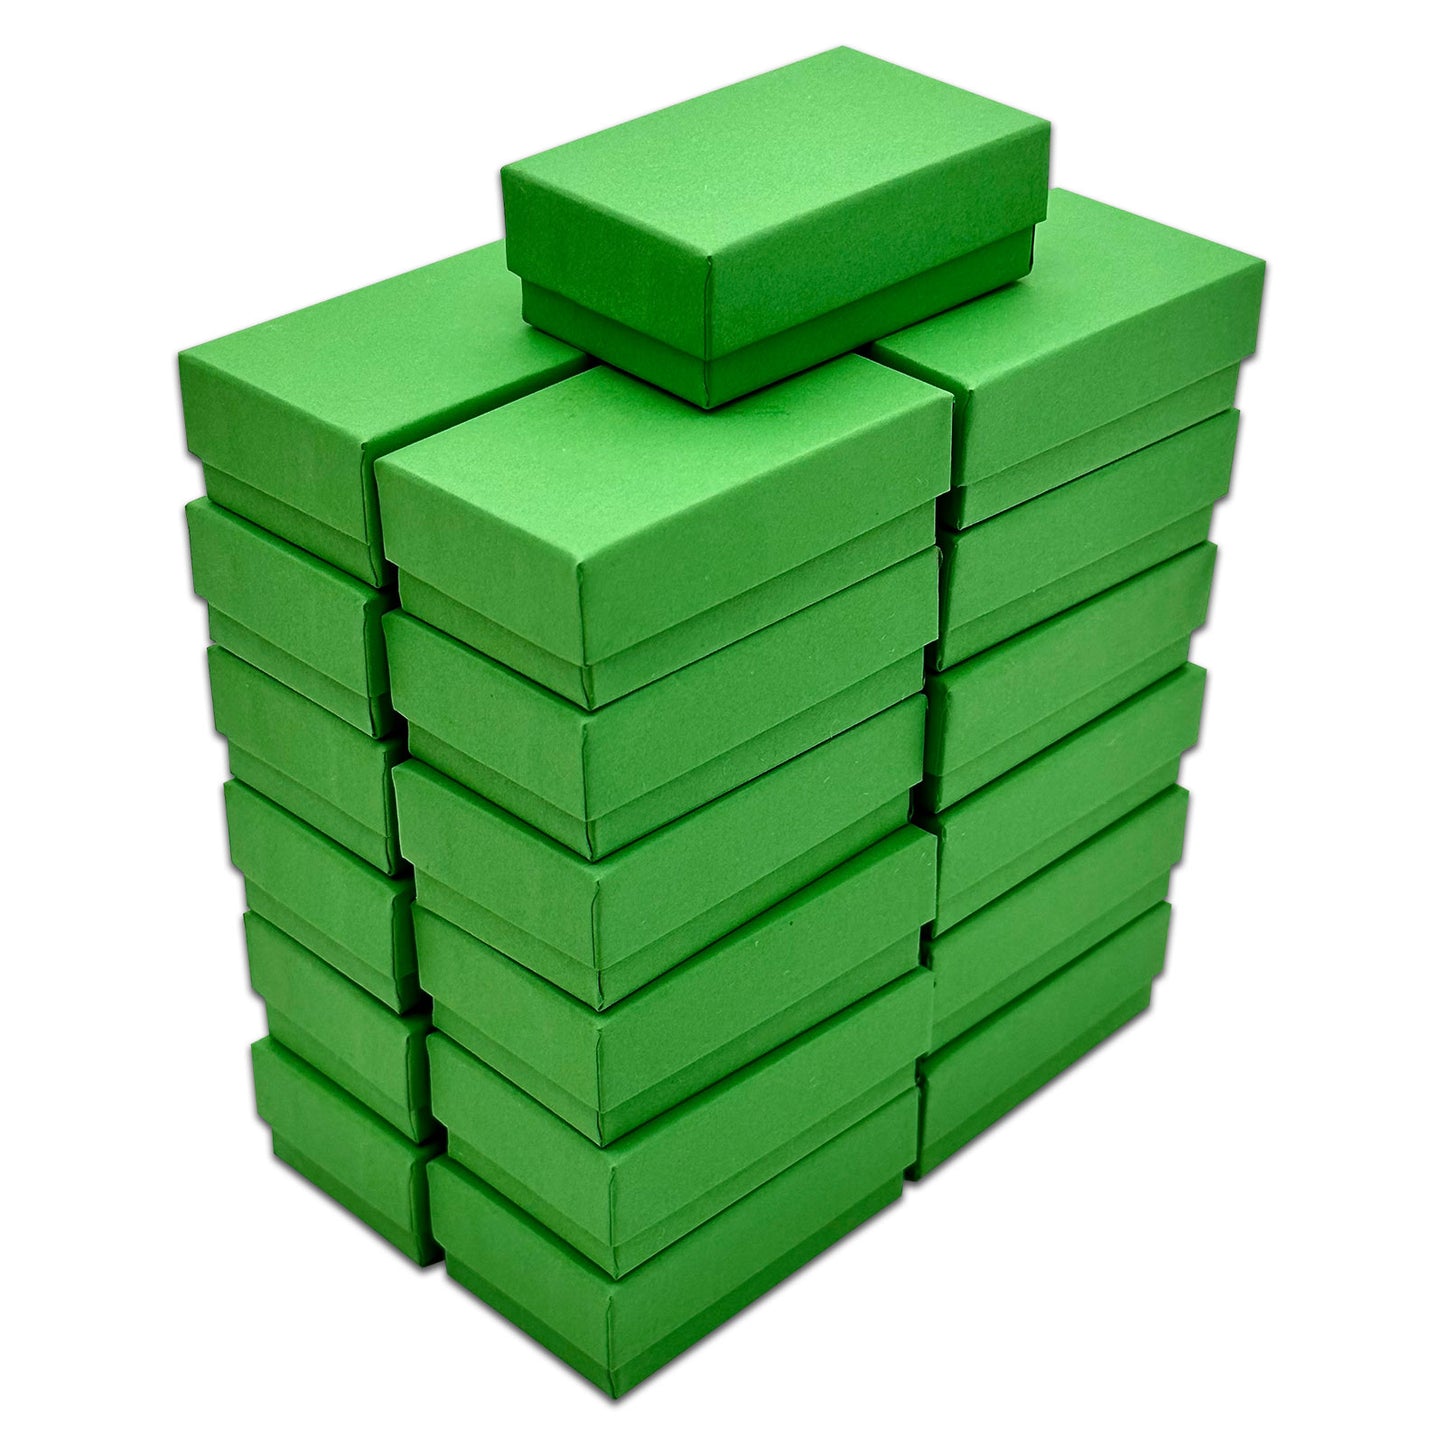 2 5/8" x 1 5/8" x 1" Light Green Cotton Filled Paper Box (25-Pack)